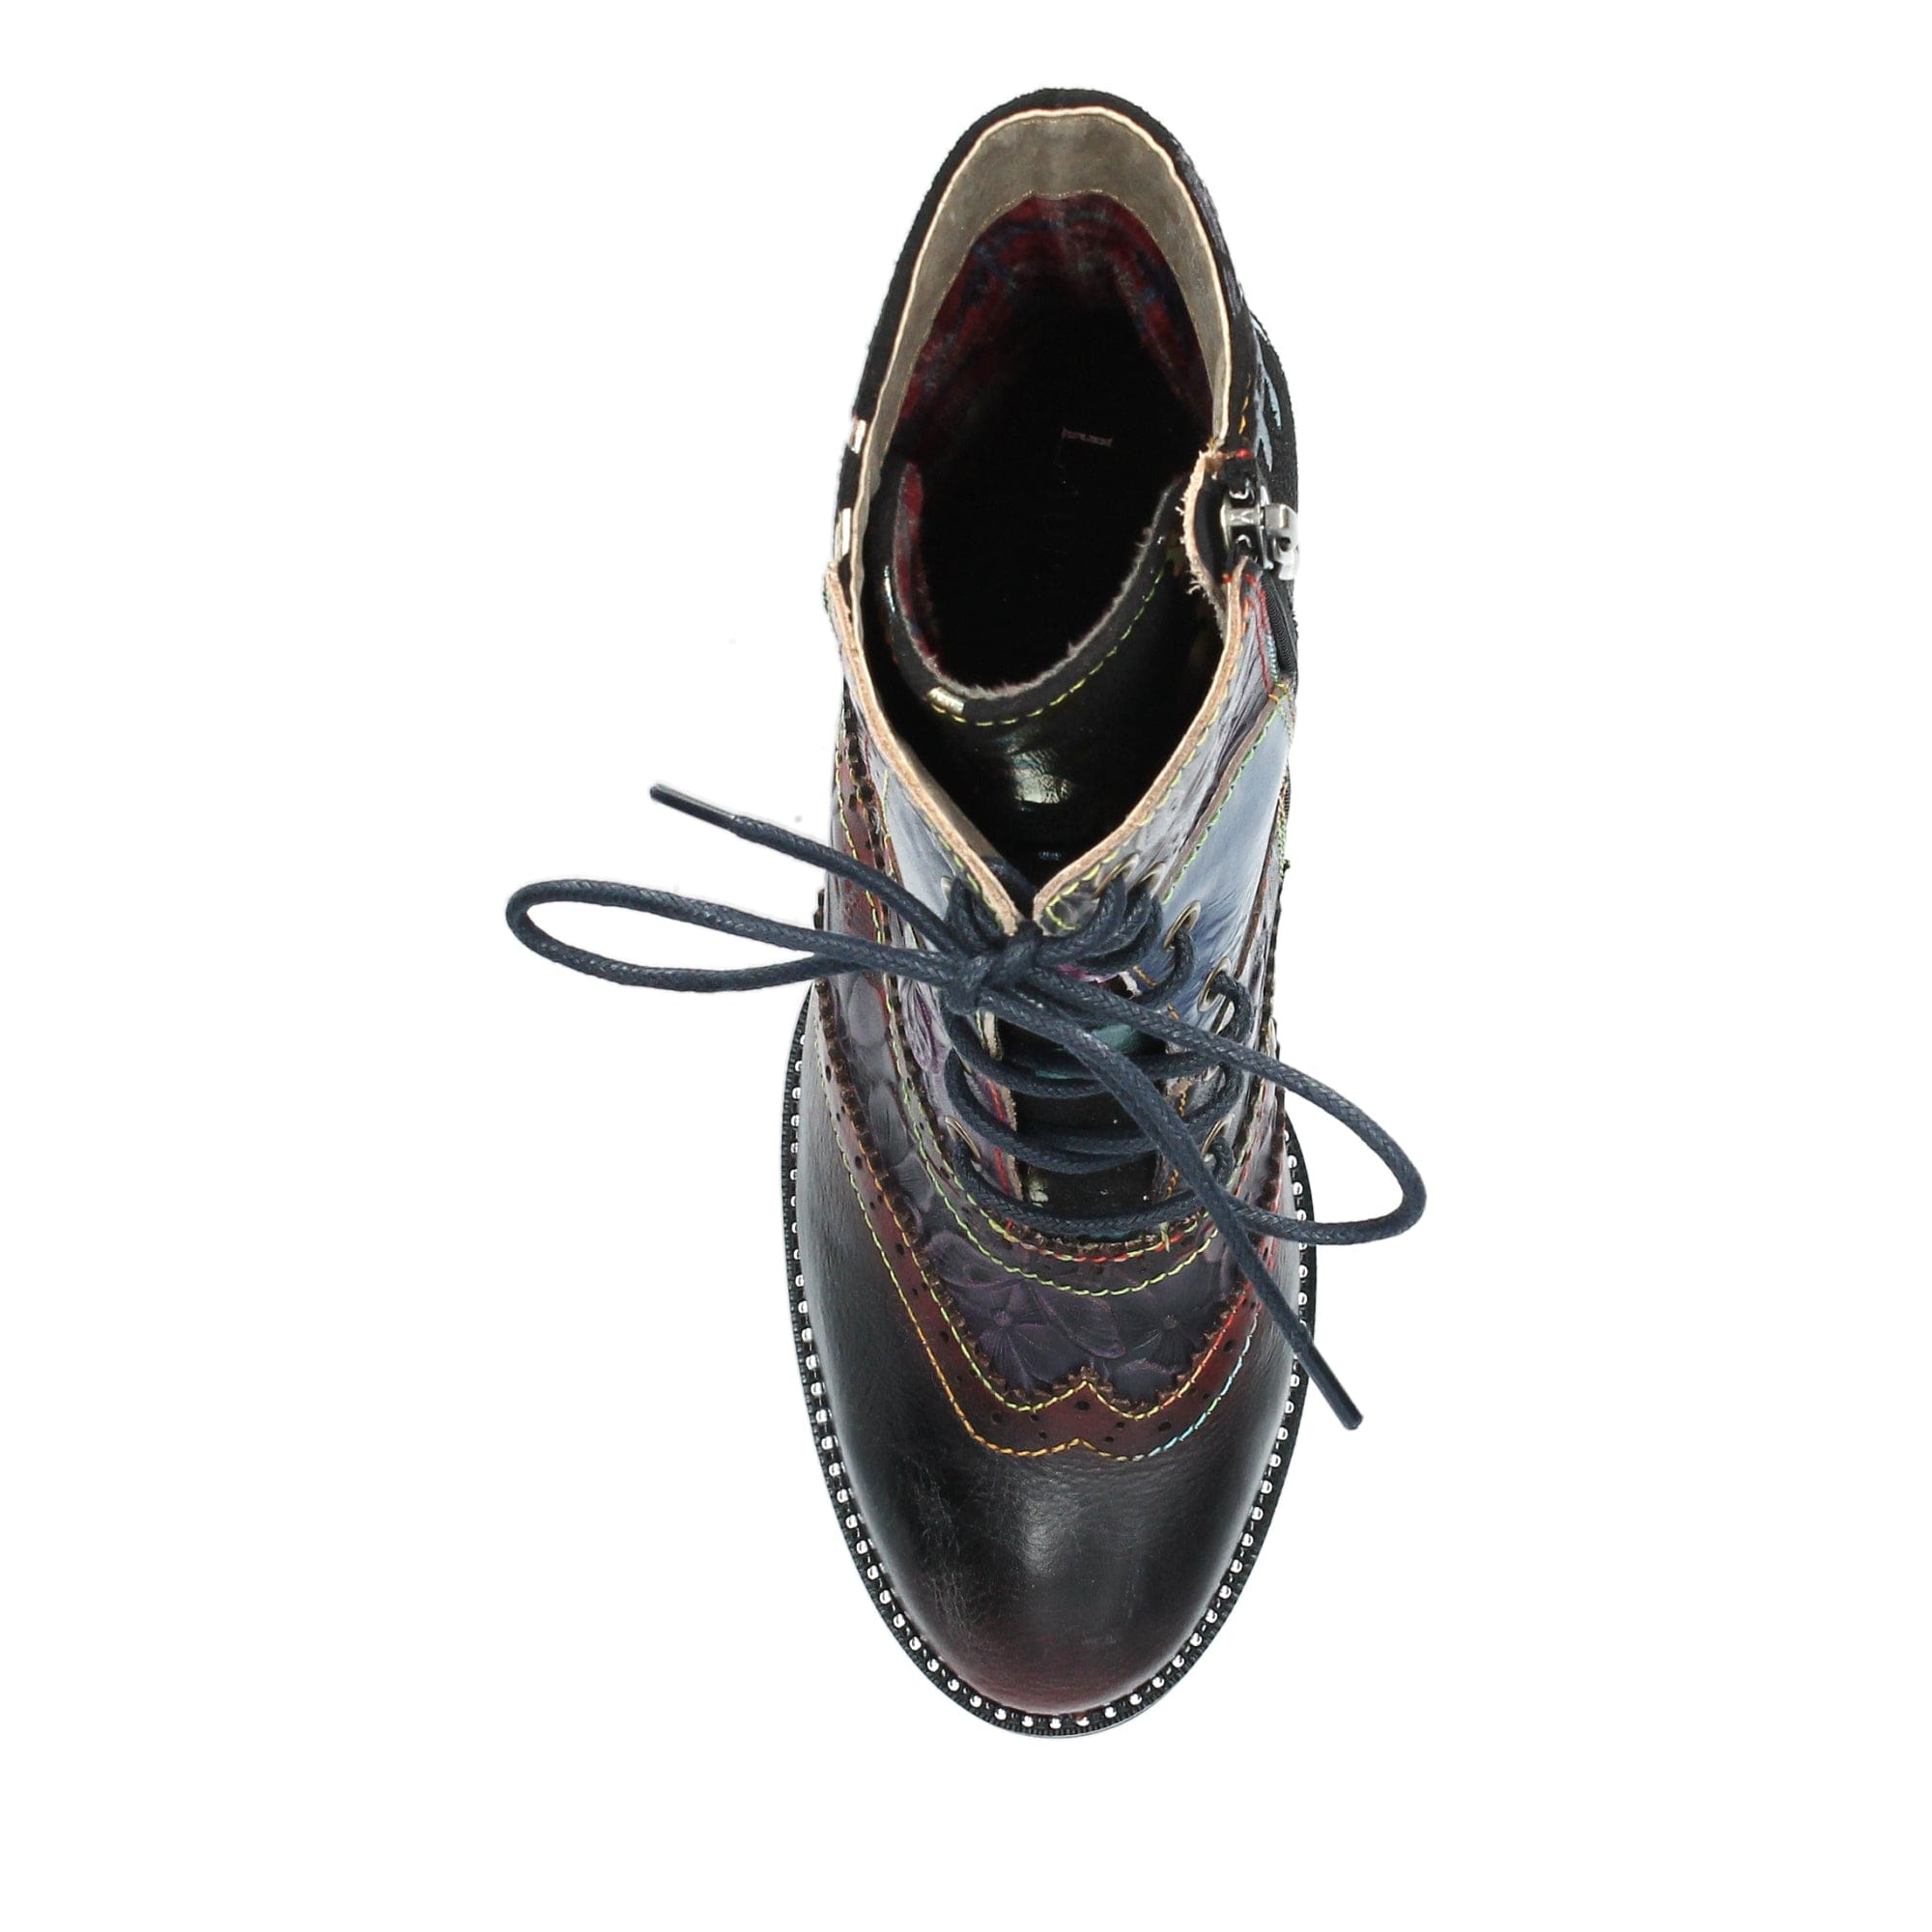 Chaussure LEDAO 09 - Boots